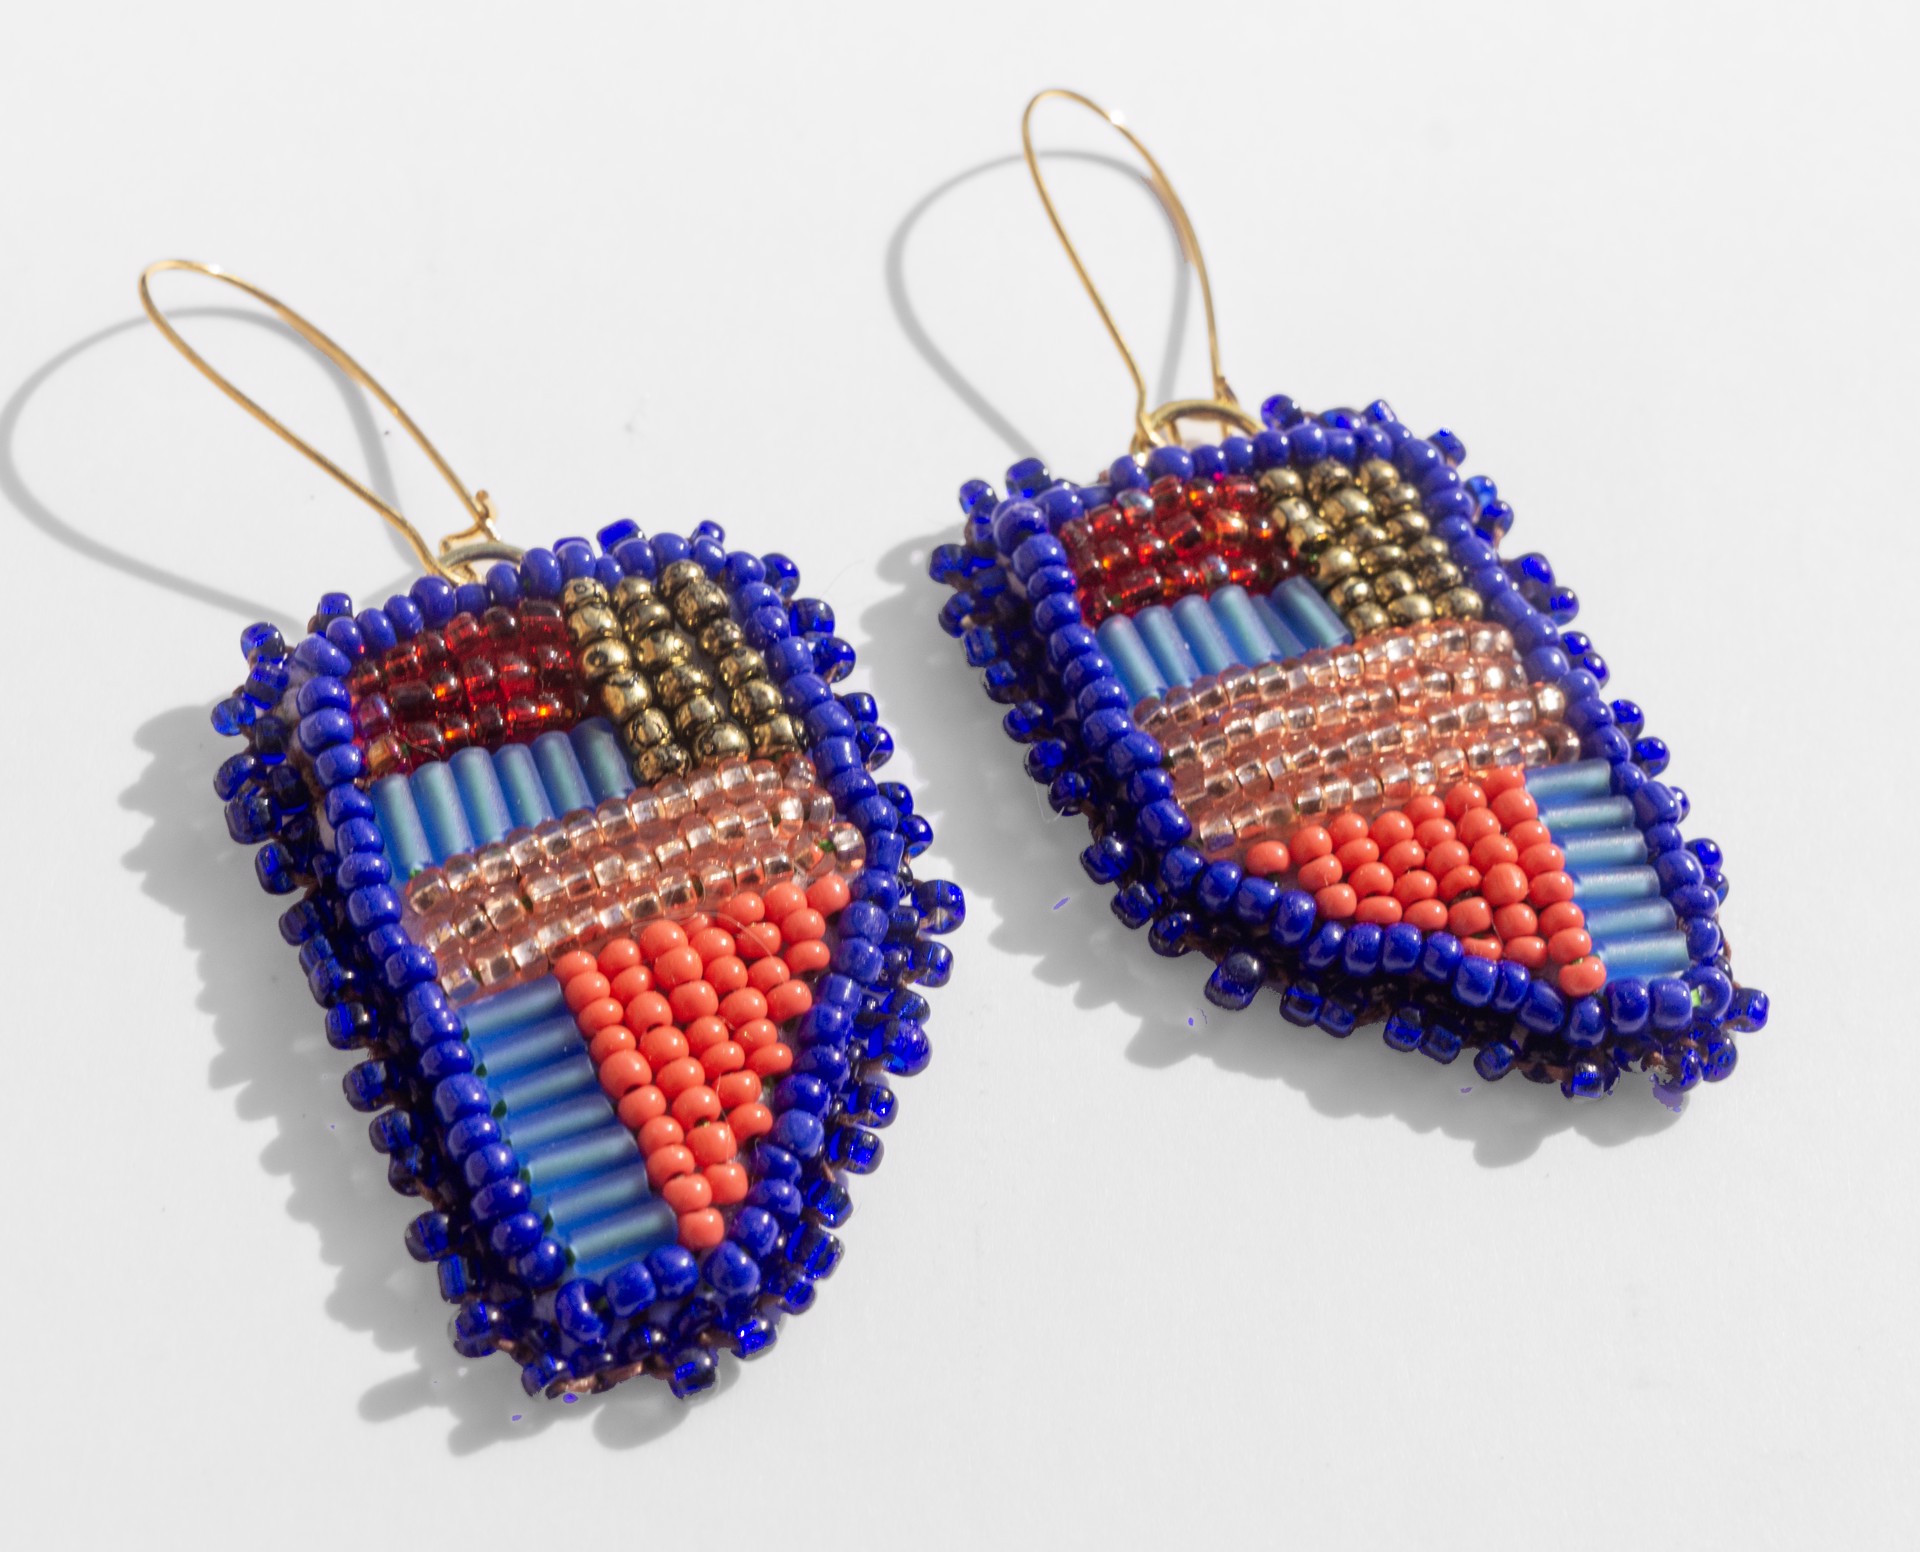 Patchwork earrings by Hattie Lee Mendoza